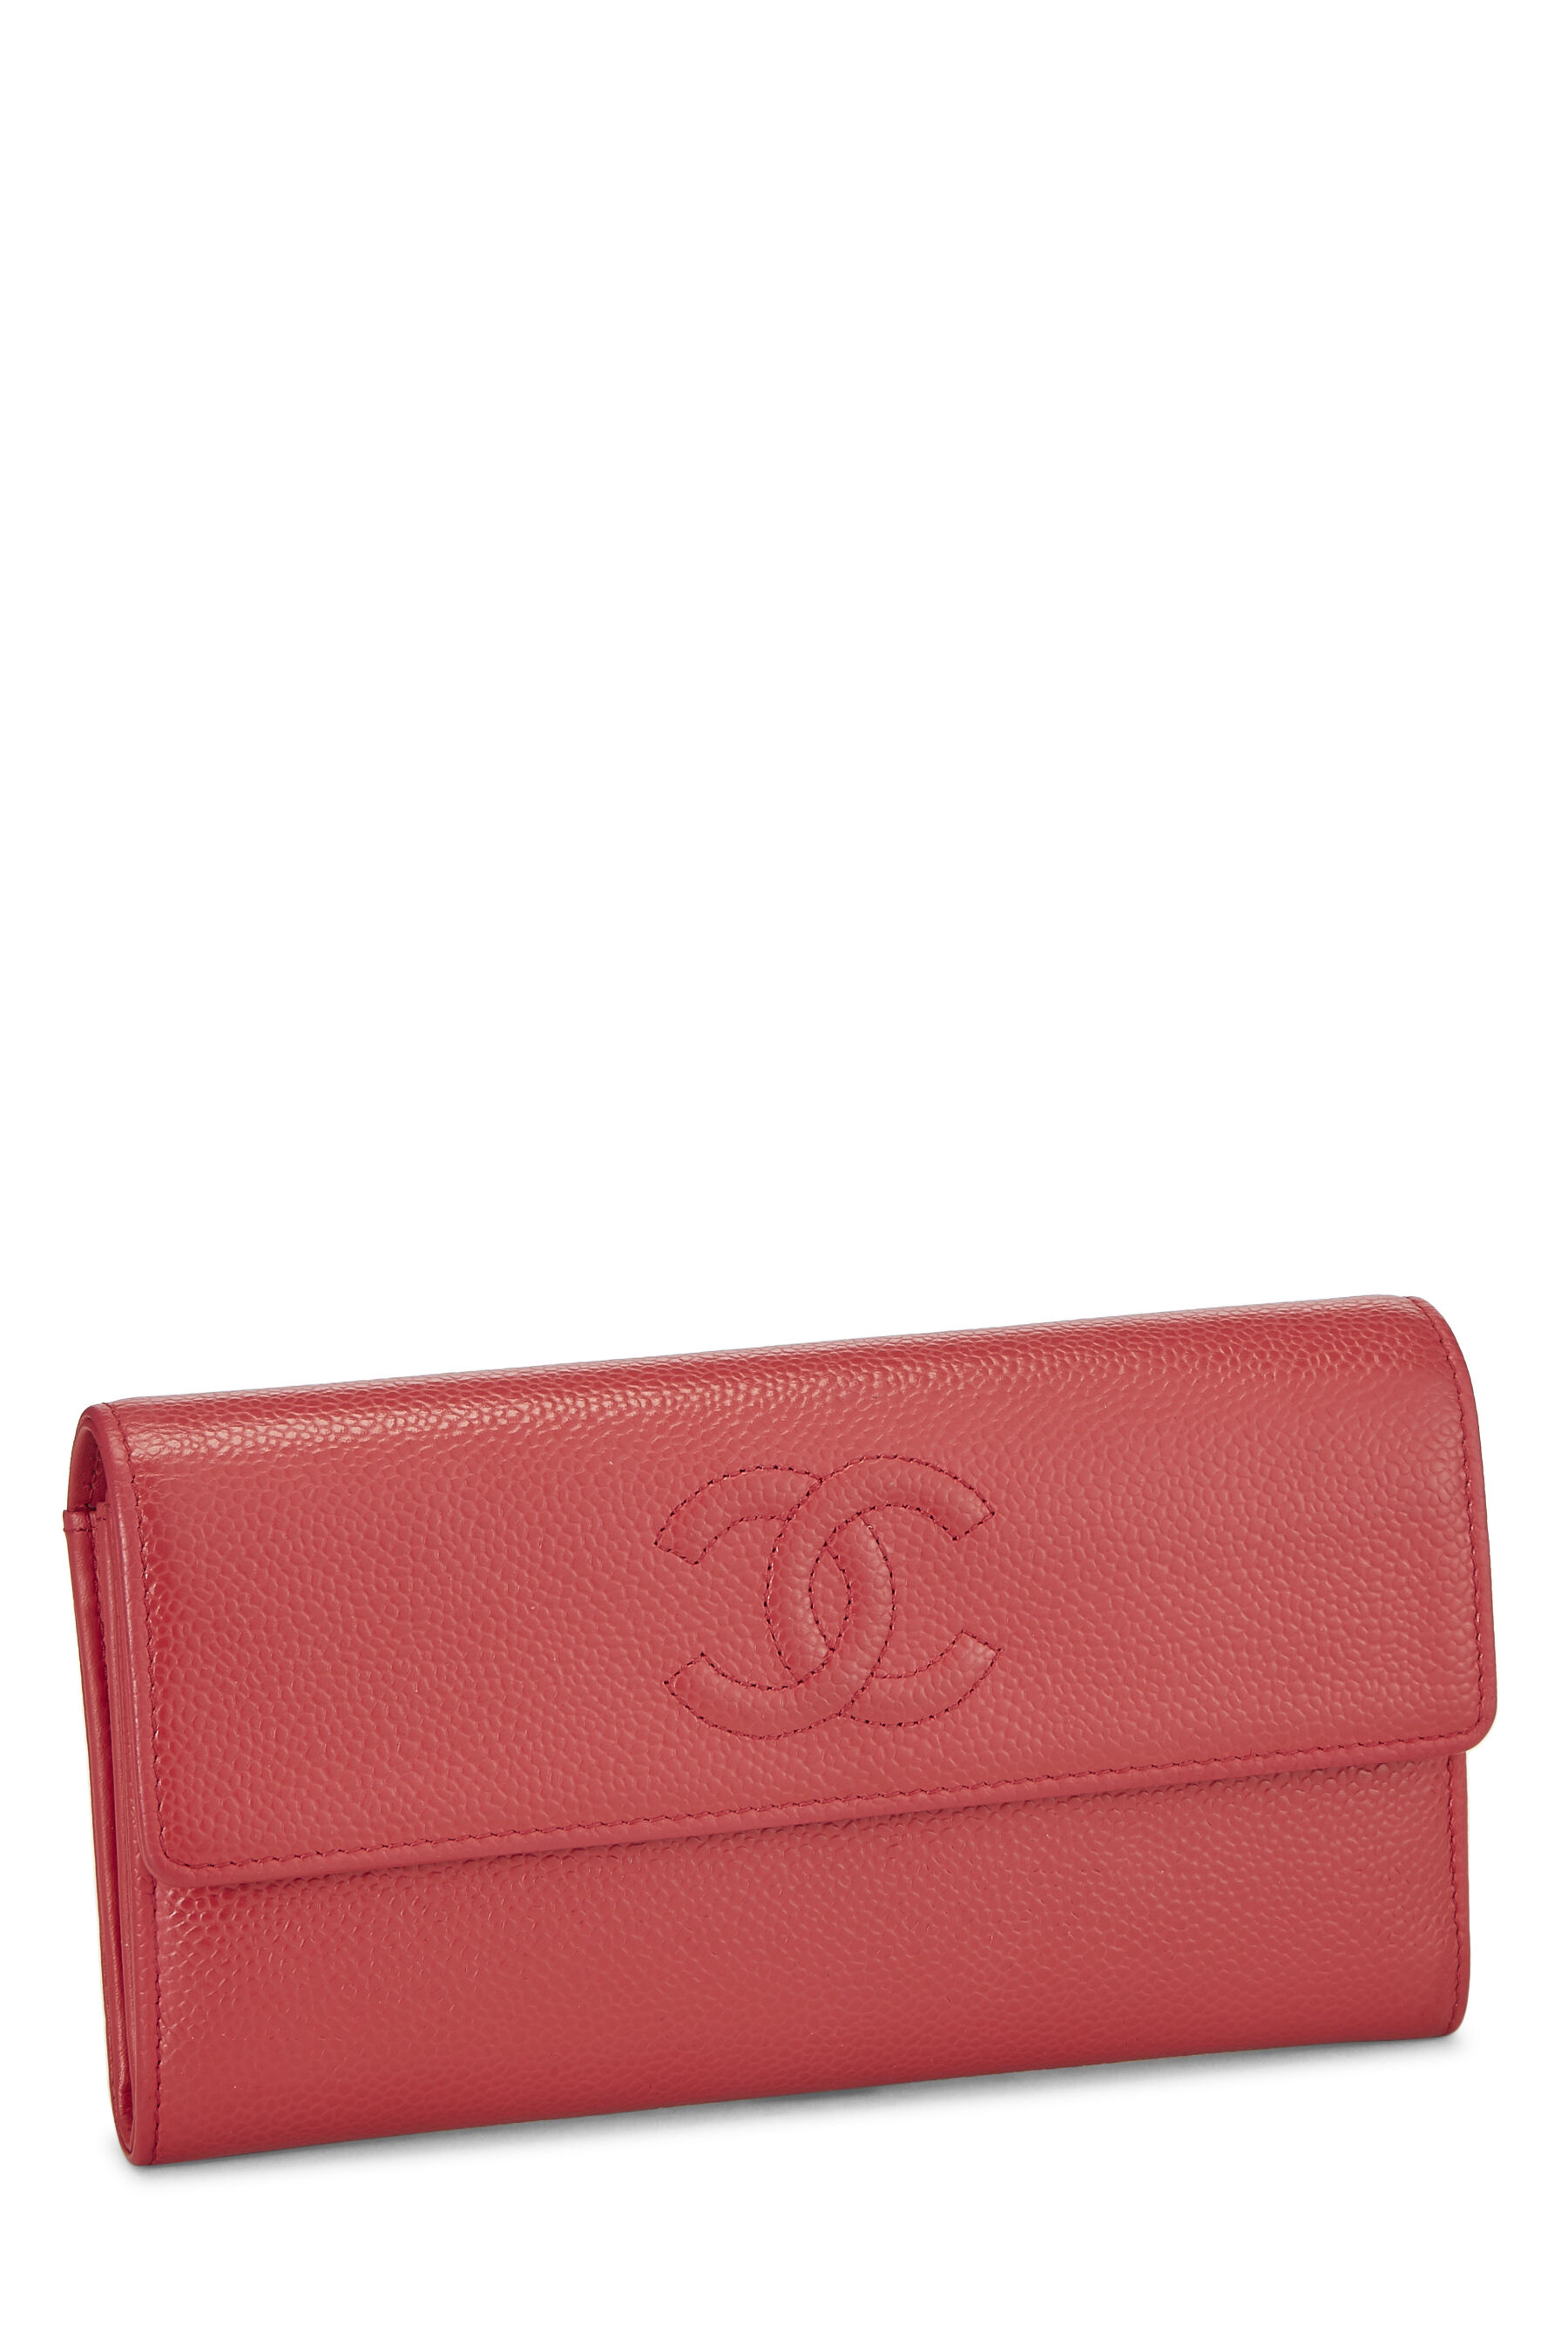 Chanel Pink Caviar Timeless 'CC' Long Wallet Q6A1O30FPB010